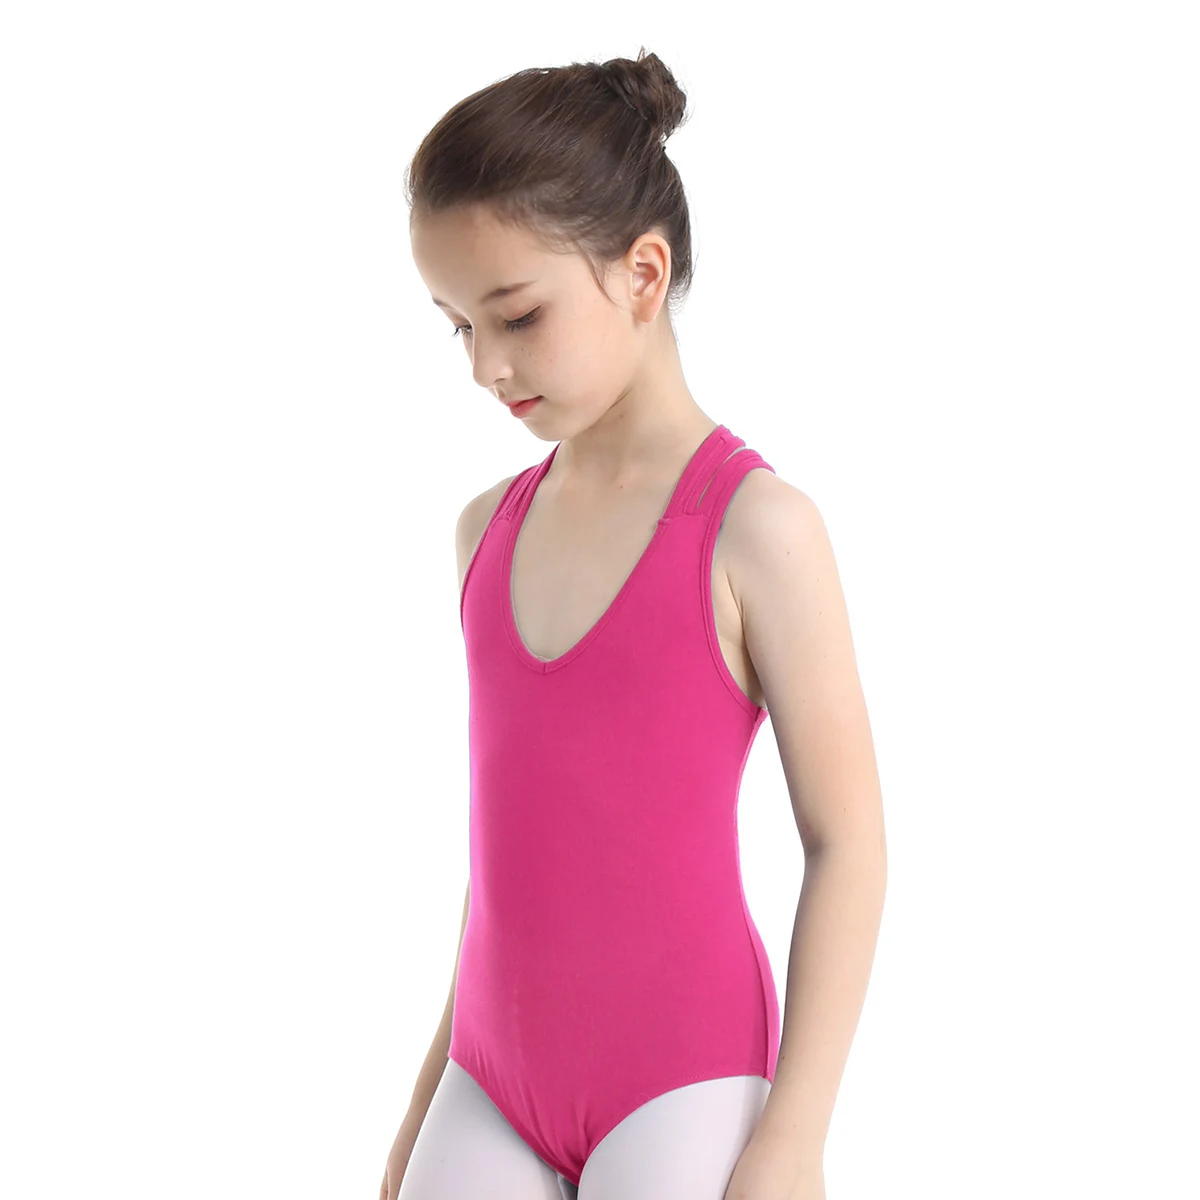 Girls Ballet Dance Leotards Kids Gymnastics Full Body Jumpsuit Training Costumes